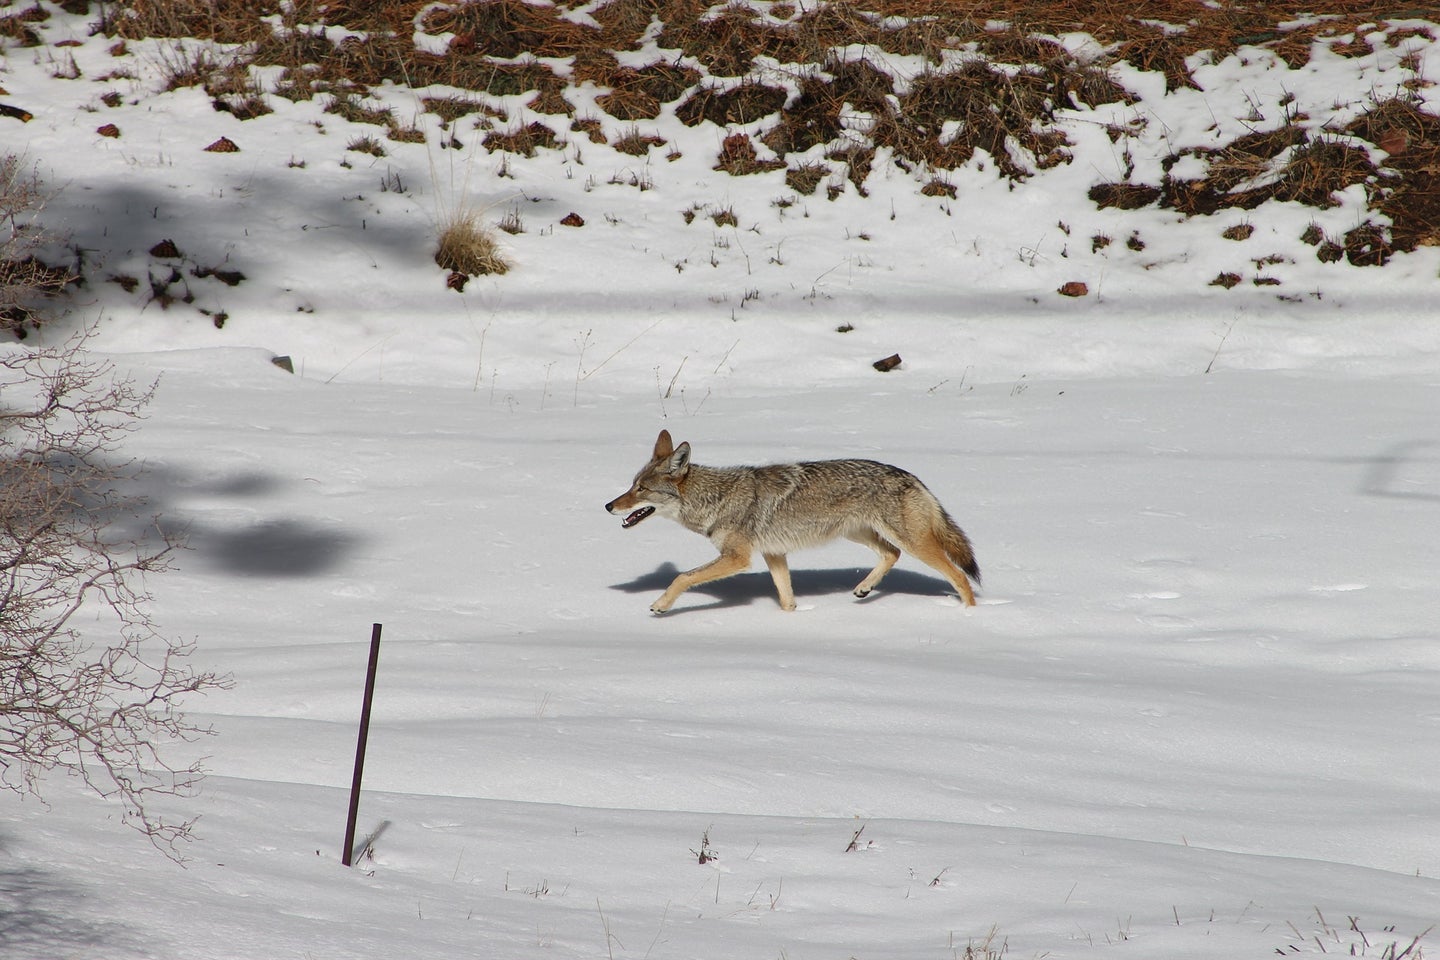 coyote runs across snowy landscape